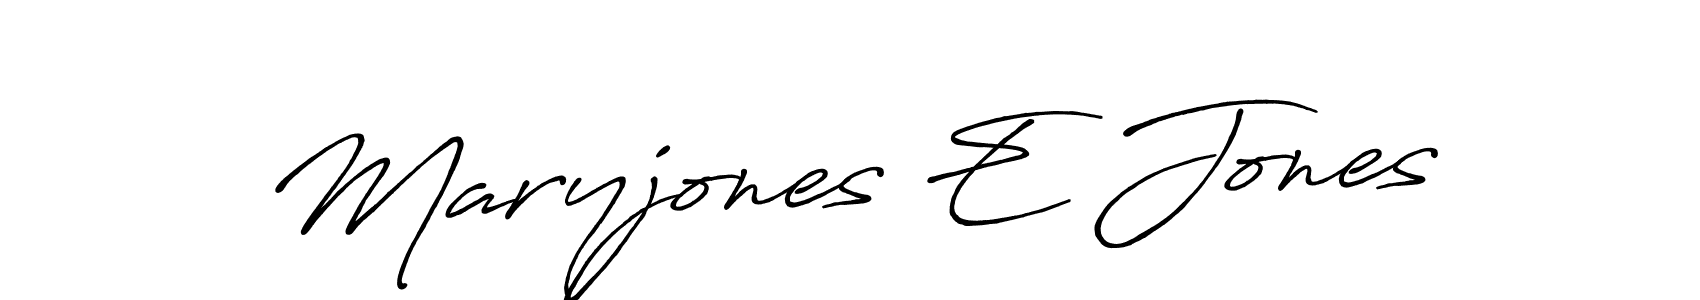 How to Draw Maryjones E Jones signature style? Antro_Vectra_Bolder is a latest design signature styles for name Maryjones E Jones. Maryjones E Jones signature style 7 images and pictures png